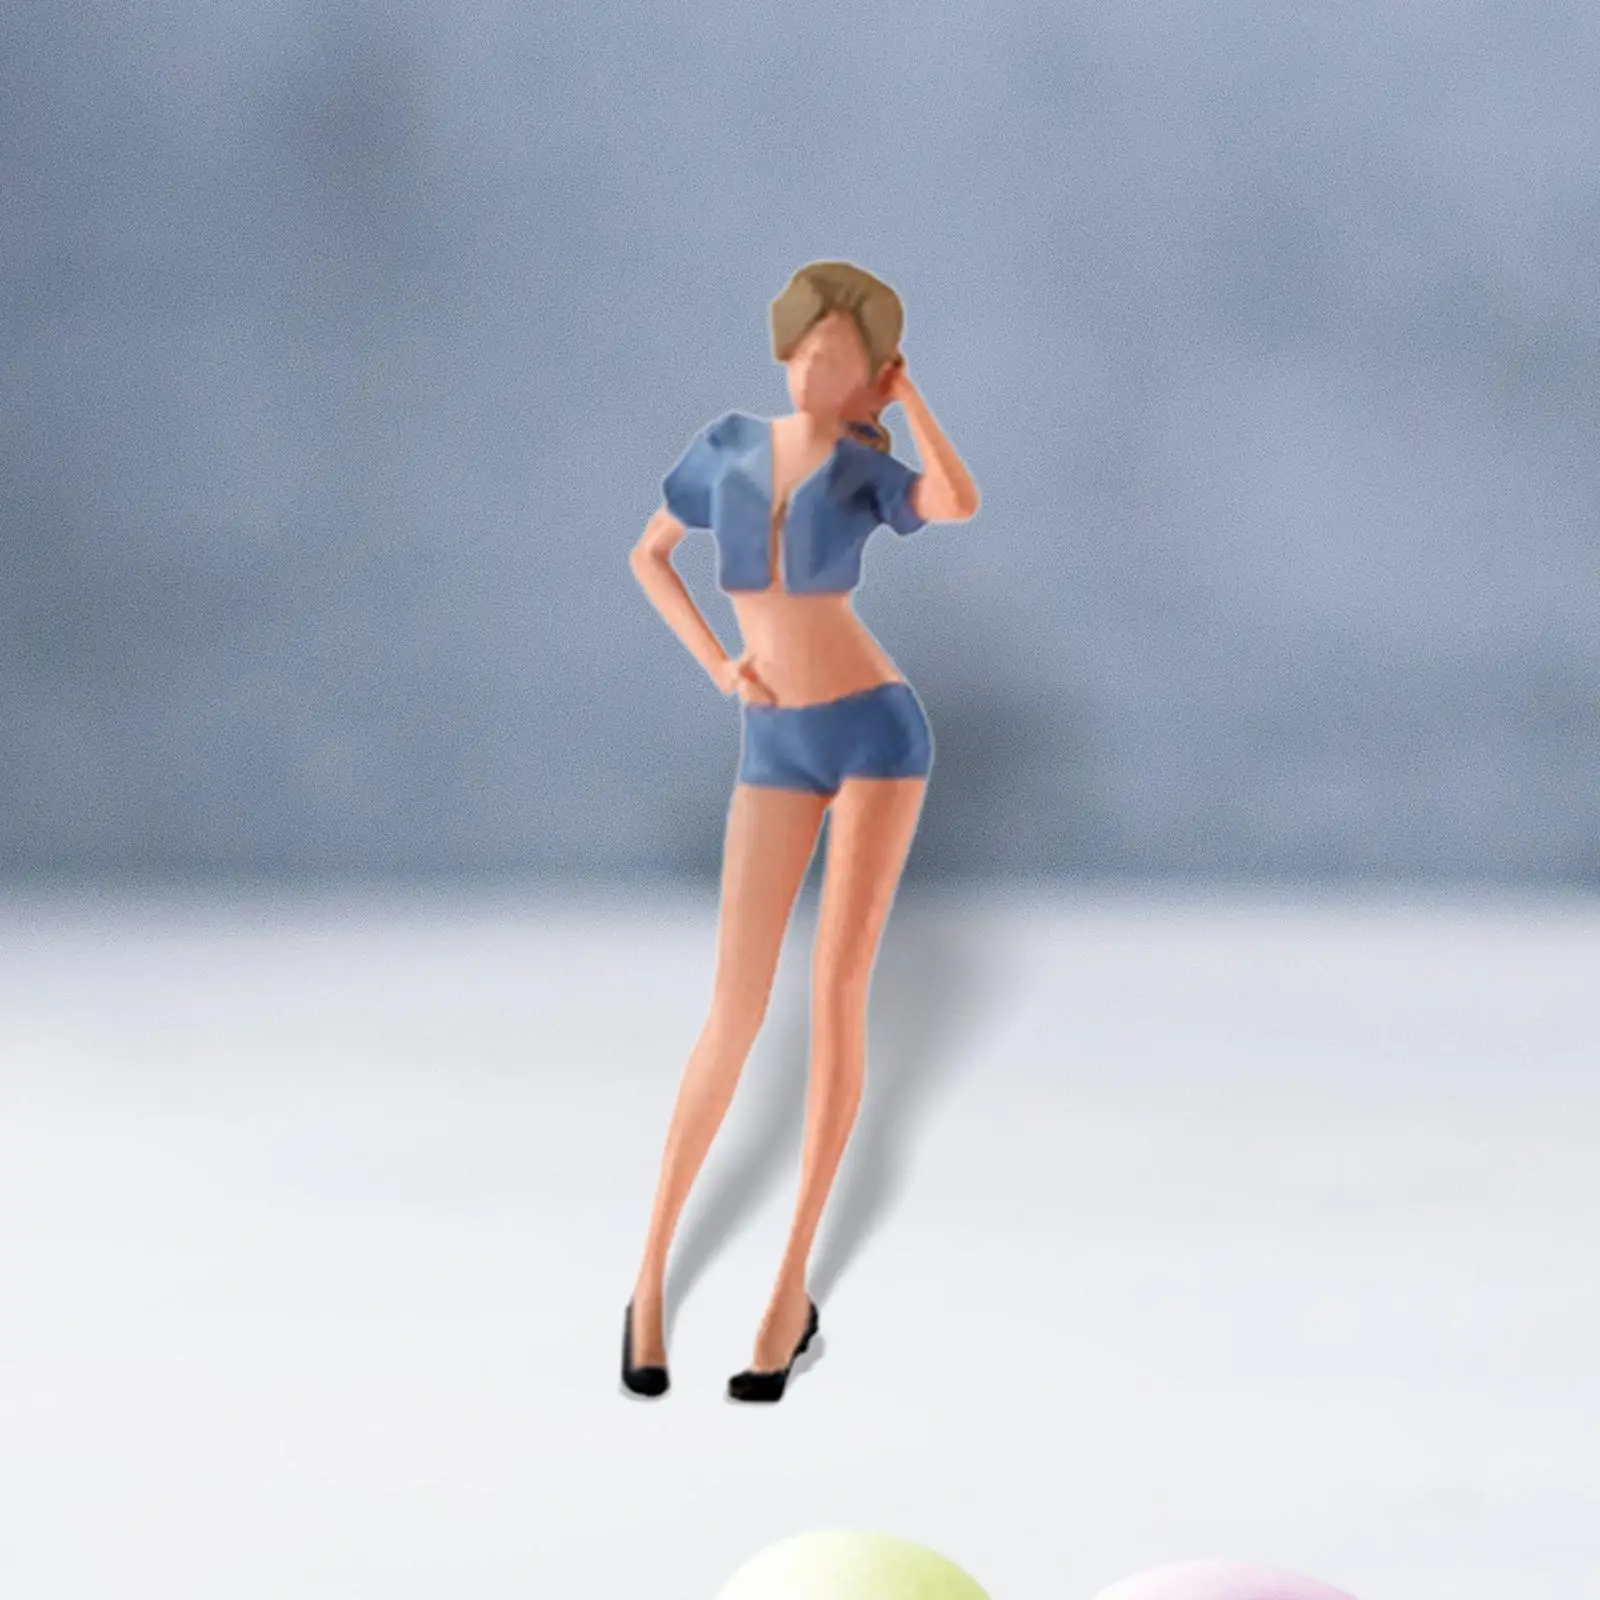 1/64 Scale People Figures Tiny People Mini People Model for Miniature Scene Layout Decor